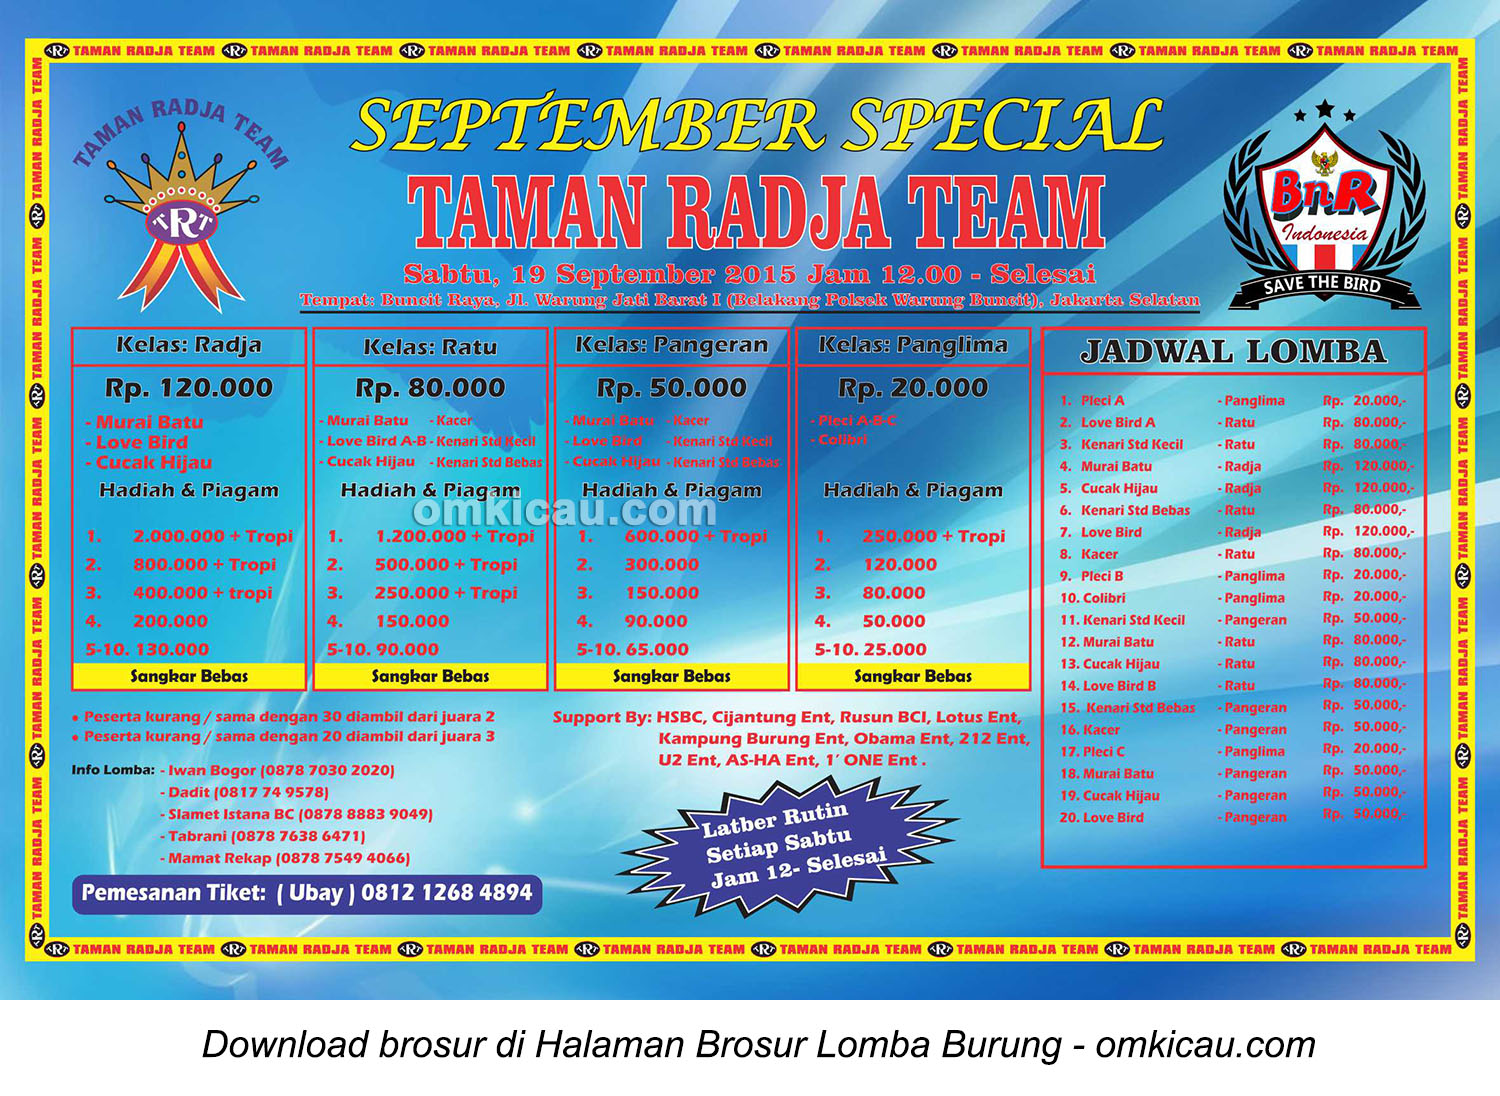 Brosur Lomba Burung Berkicau September Special Taman Radja Team, Jakarta, 19 September 2015